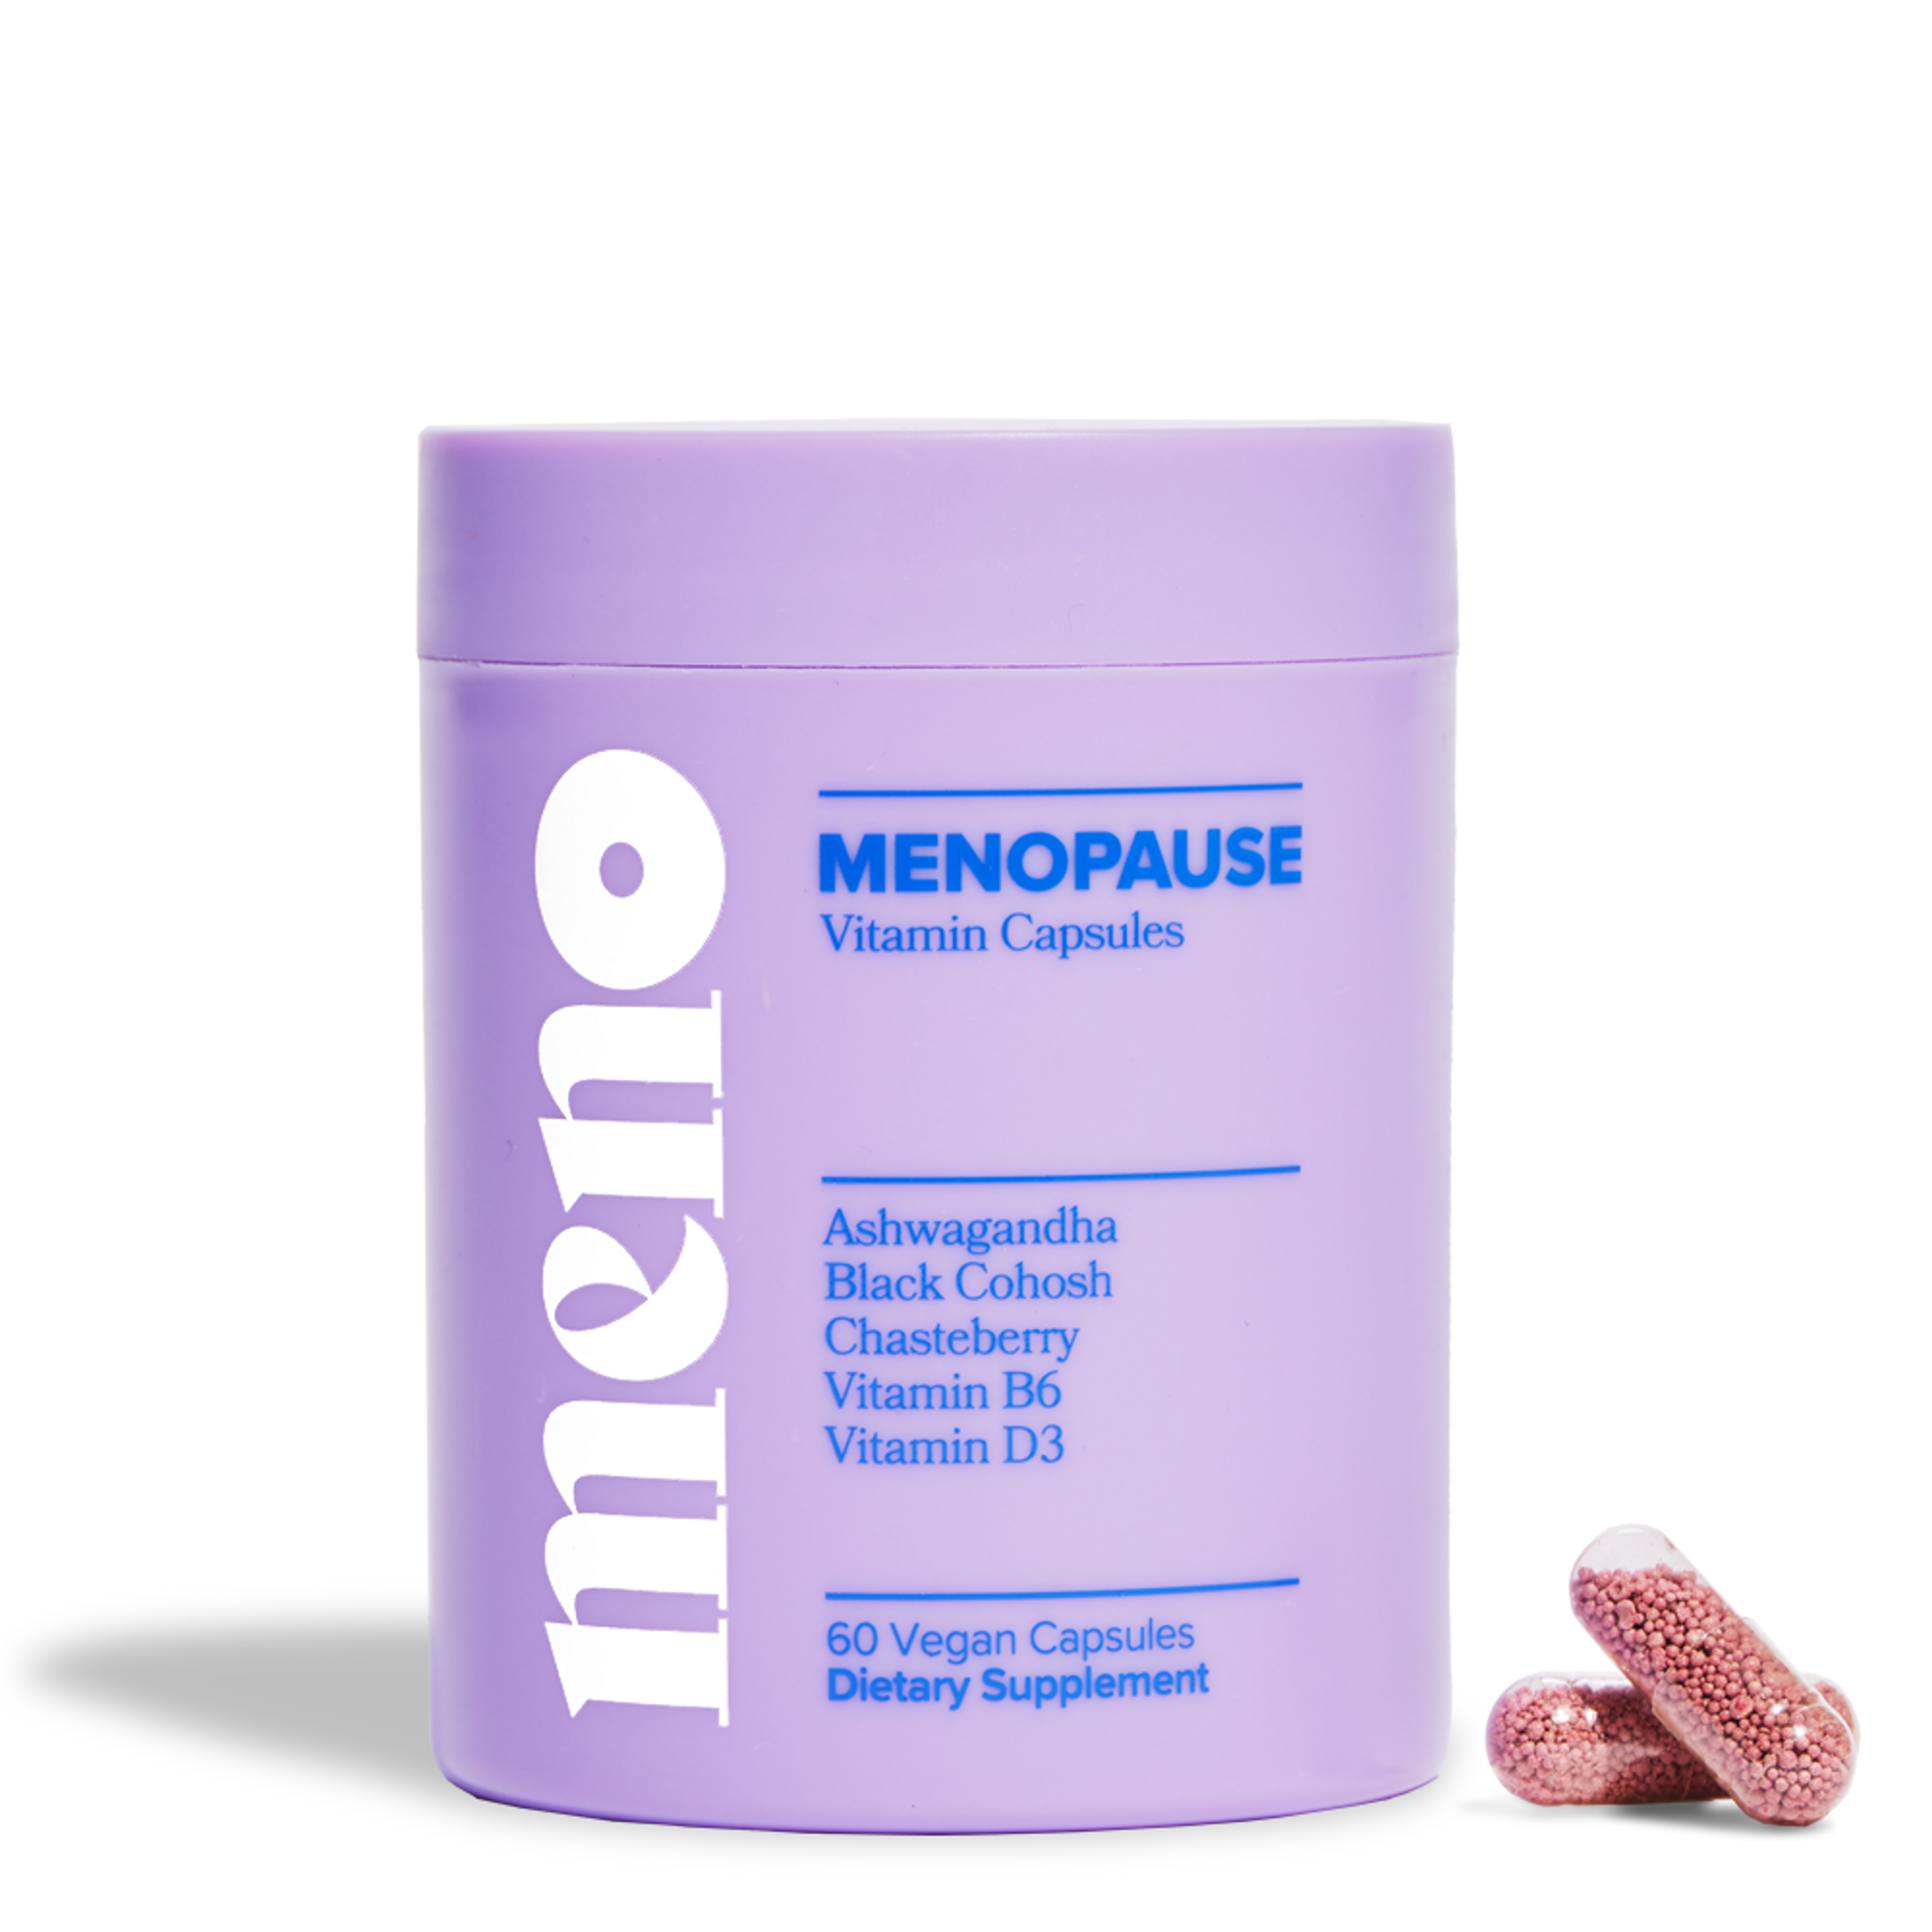 MENO - Menopause Vitamin Capsules